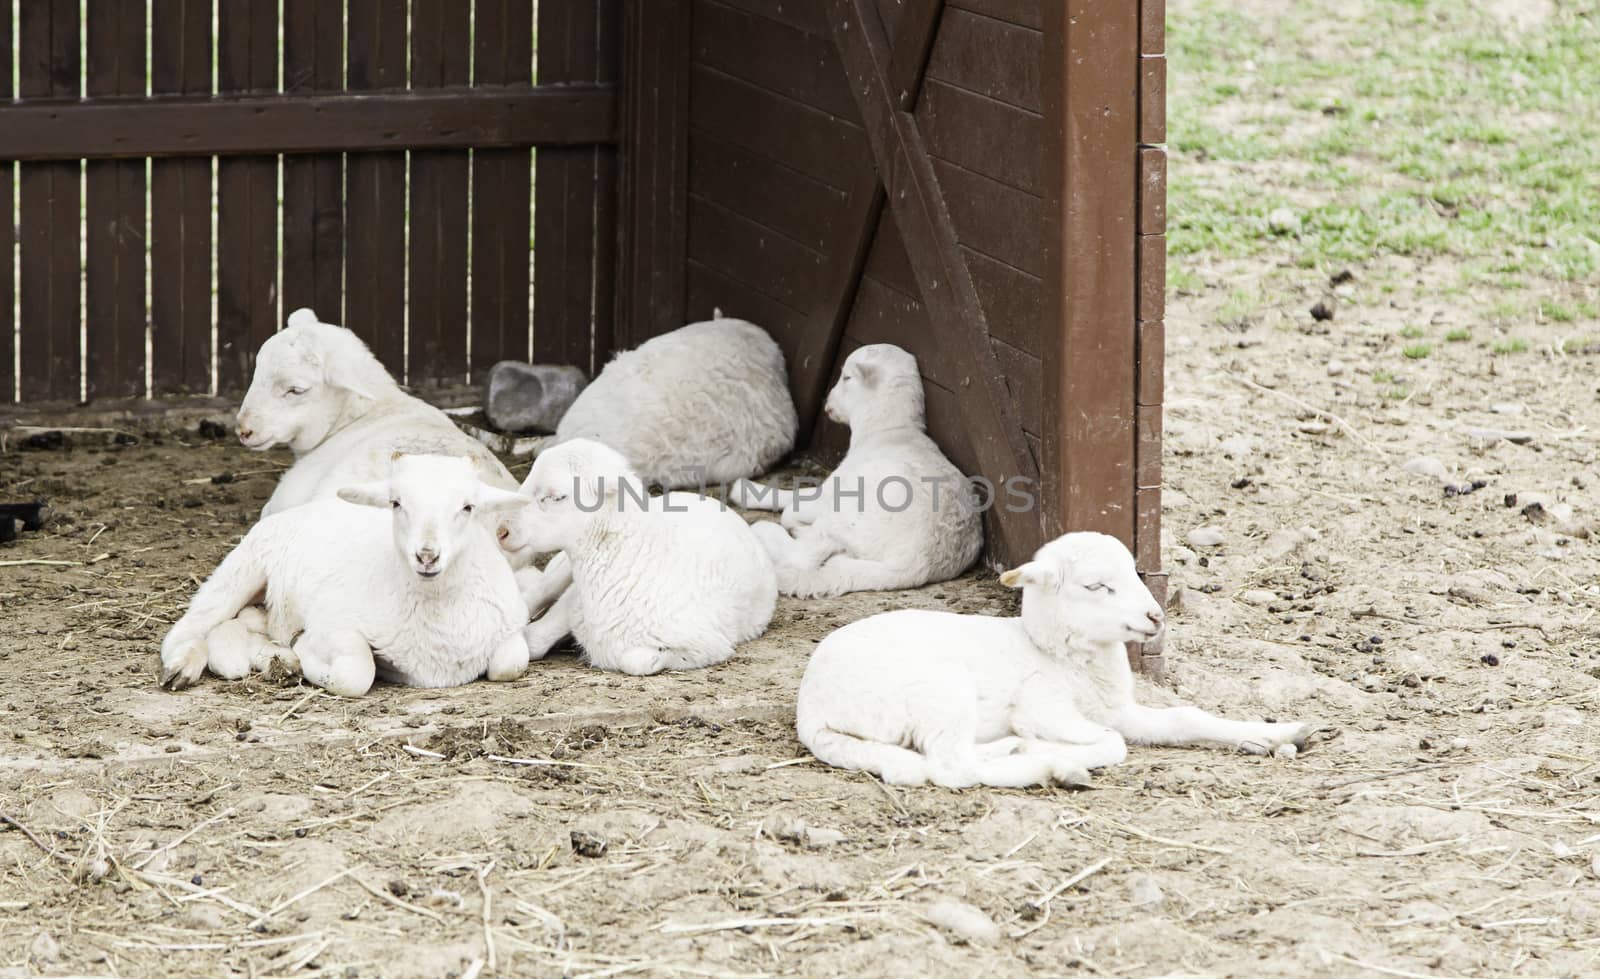 Sheep on a farm, detail of a mammal, farm animal, wool